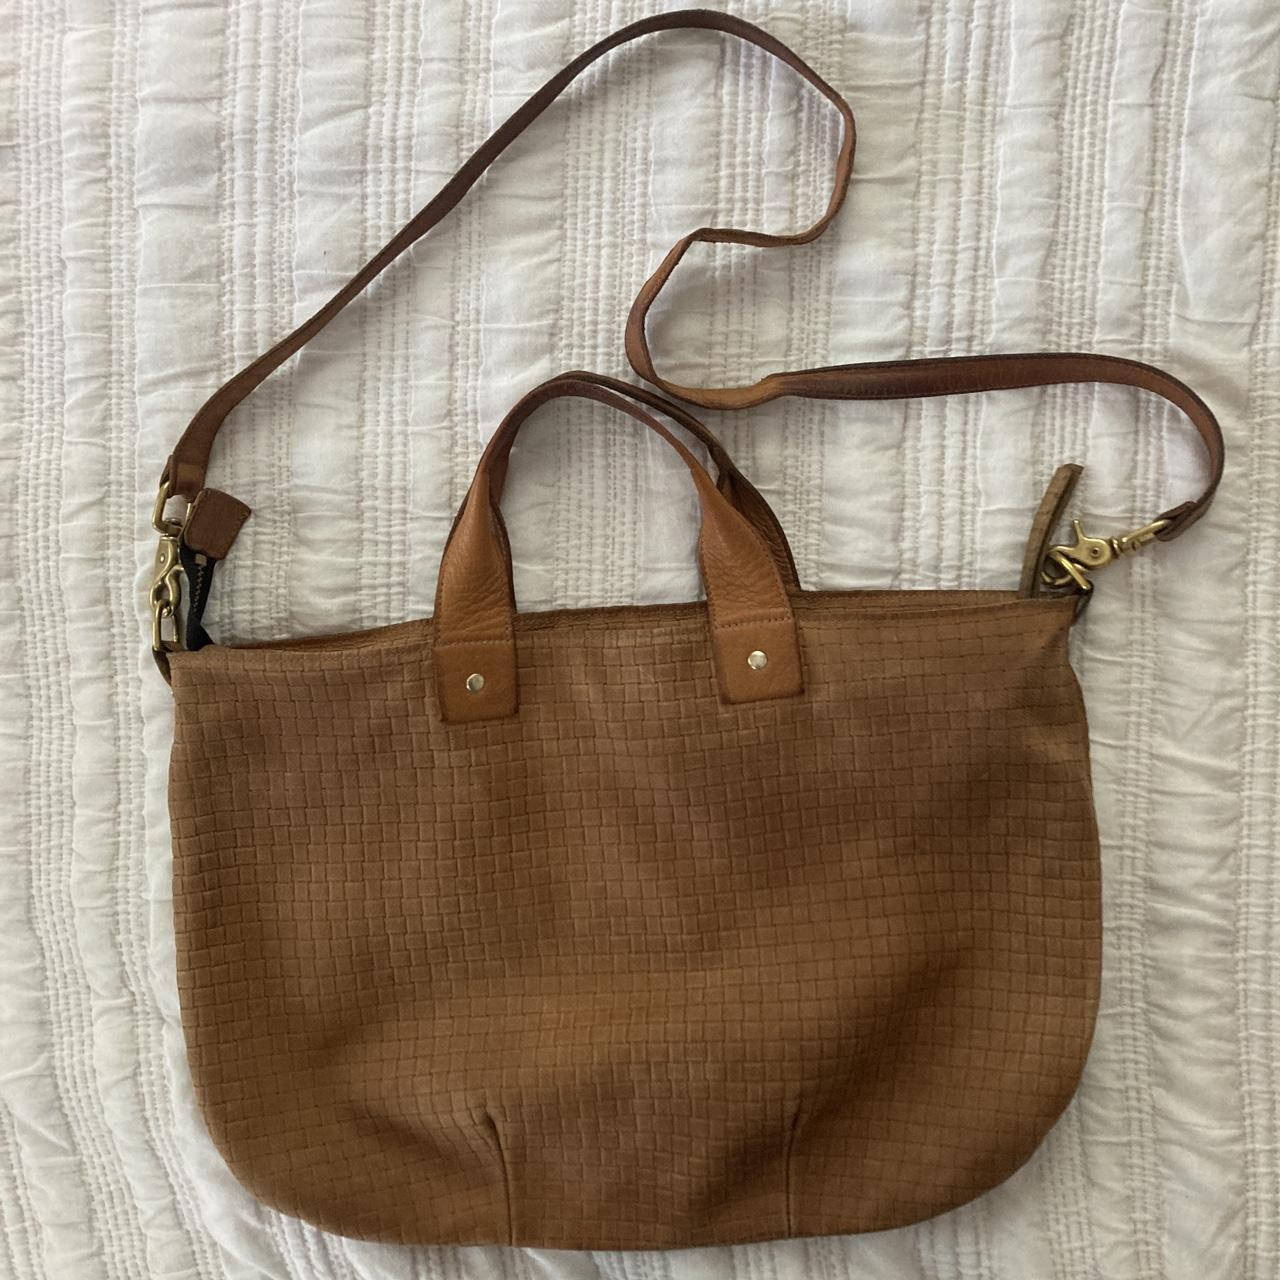 Clare Vivier classic Messenger bag with top handles - Depop